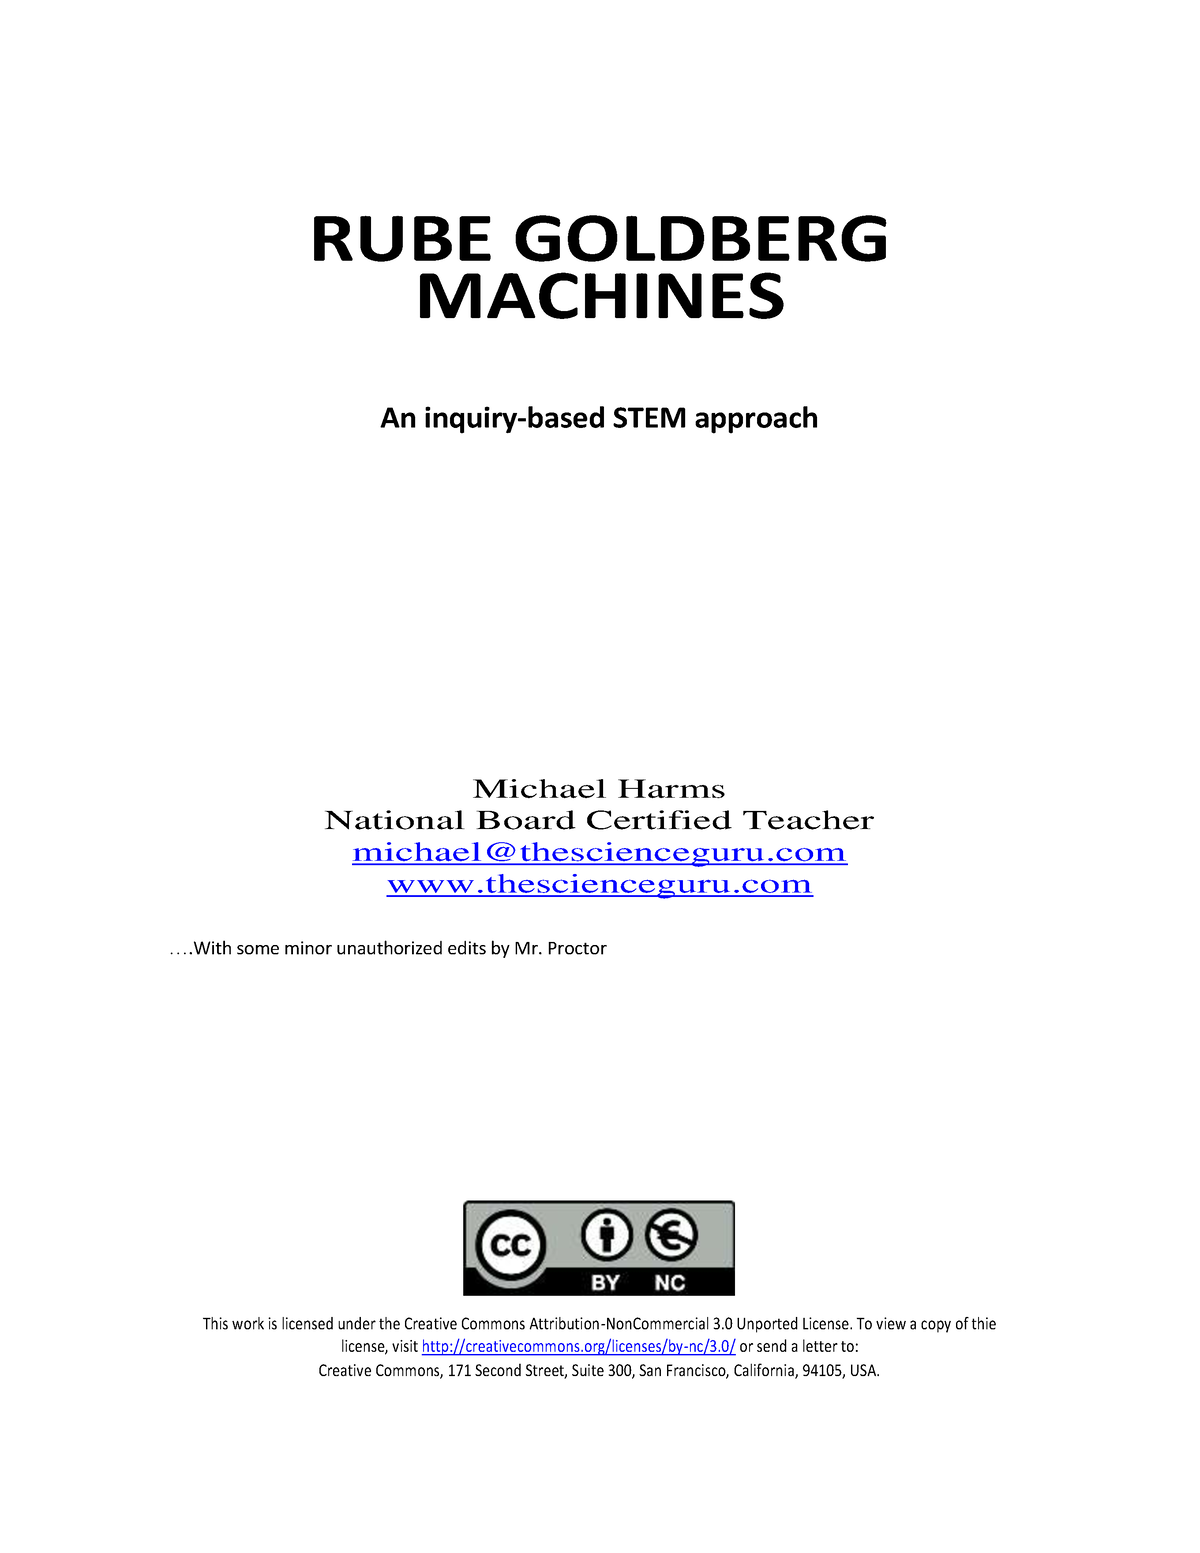 Rube-Goldberg-Project-Overview - 2021 edit - RUBE GOLDBERG MACHINES An ...